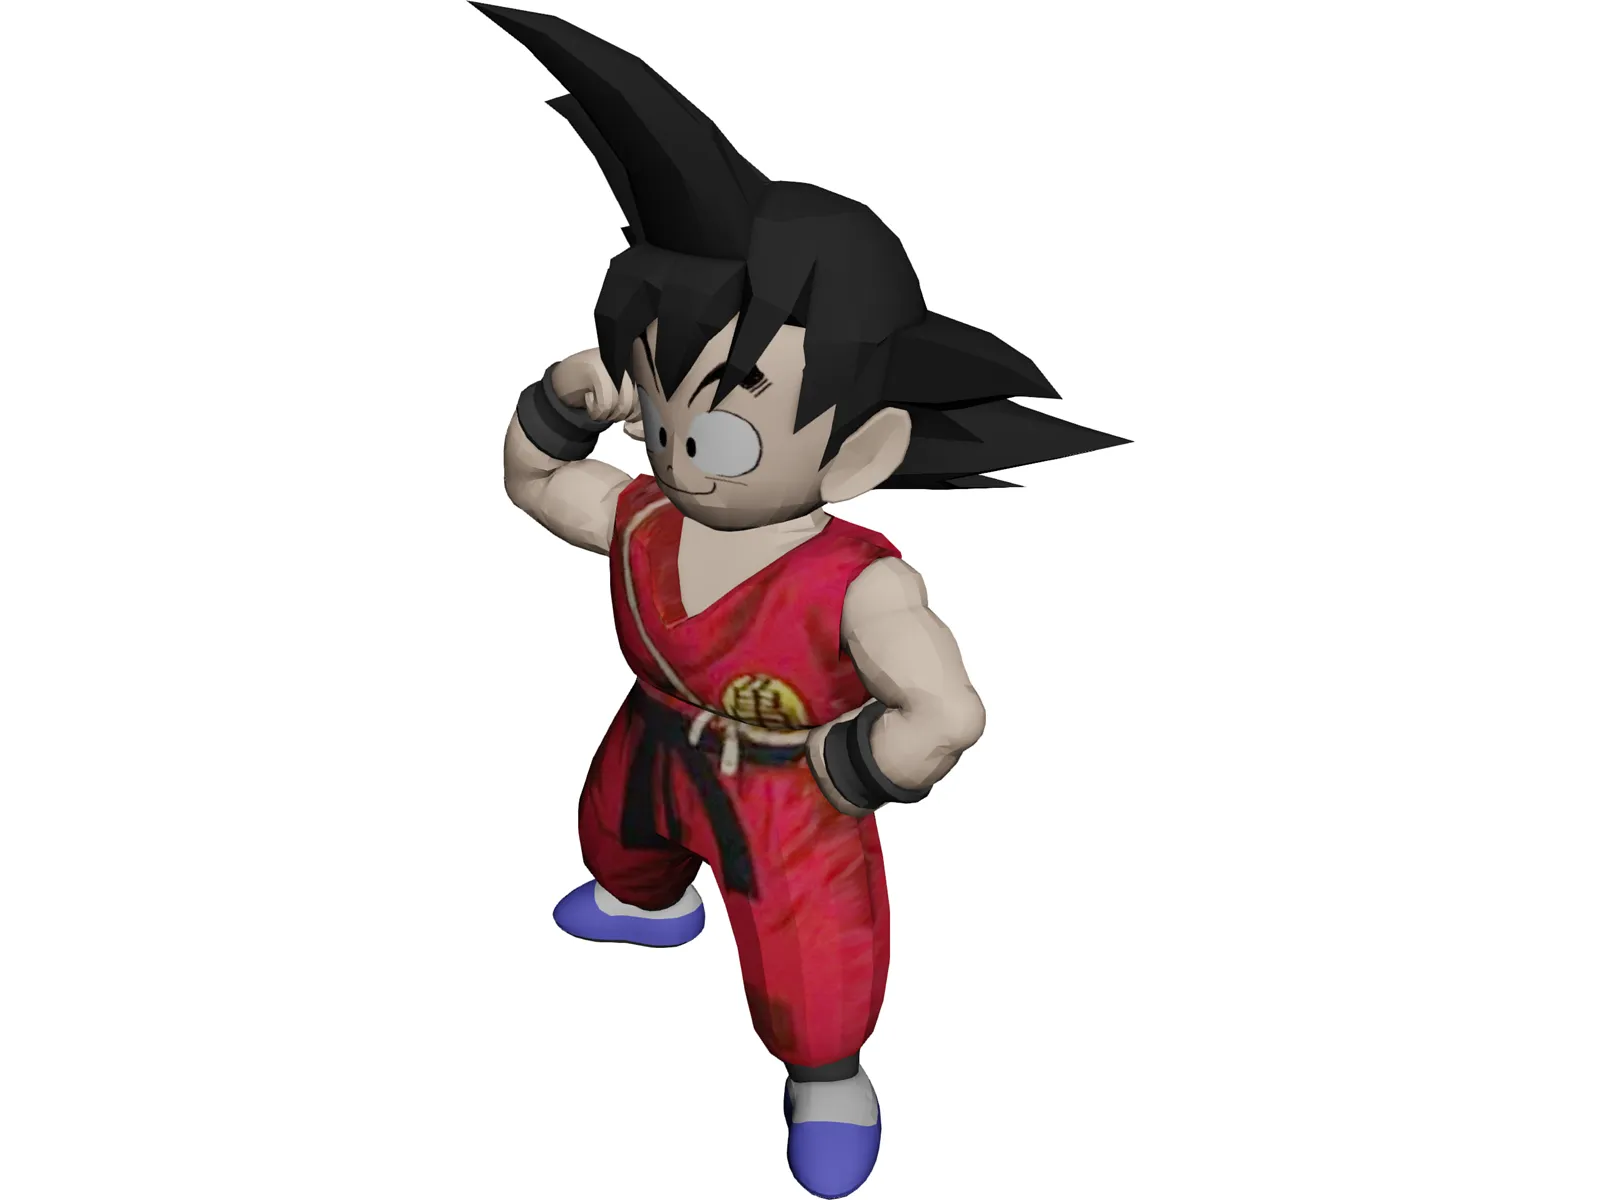 Goku 3D Model